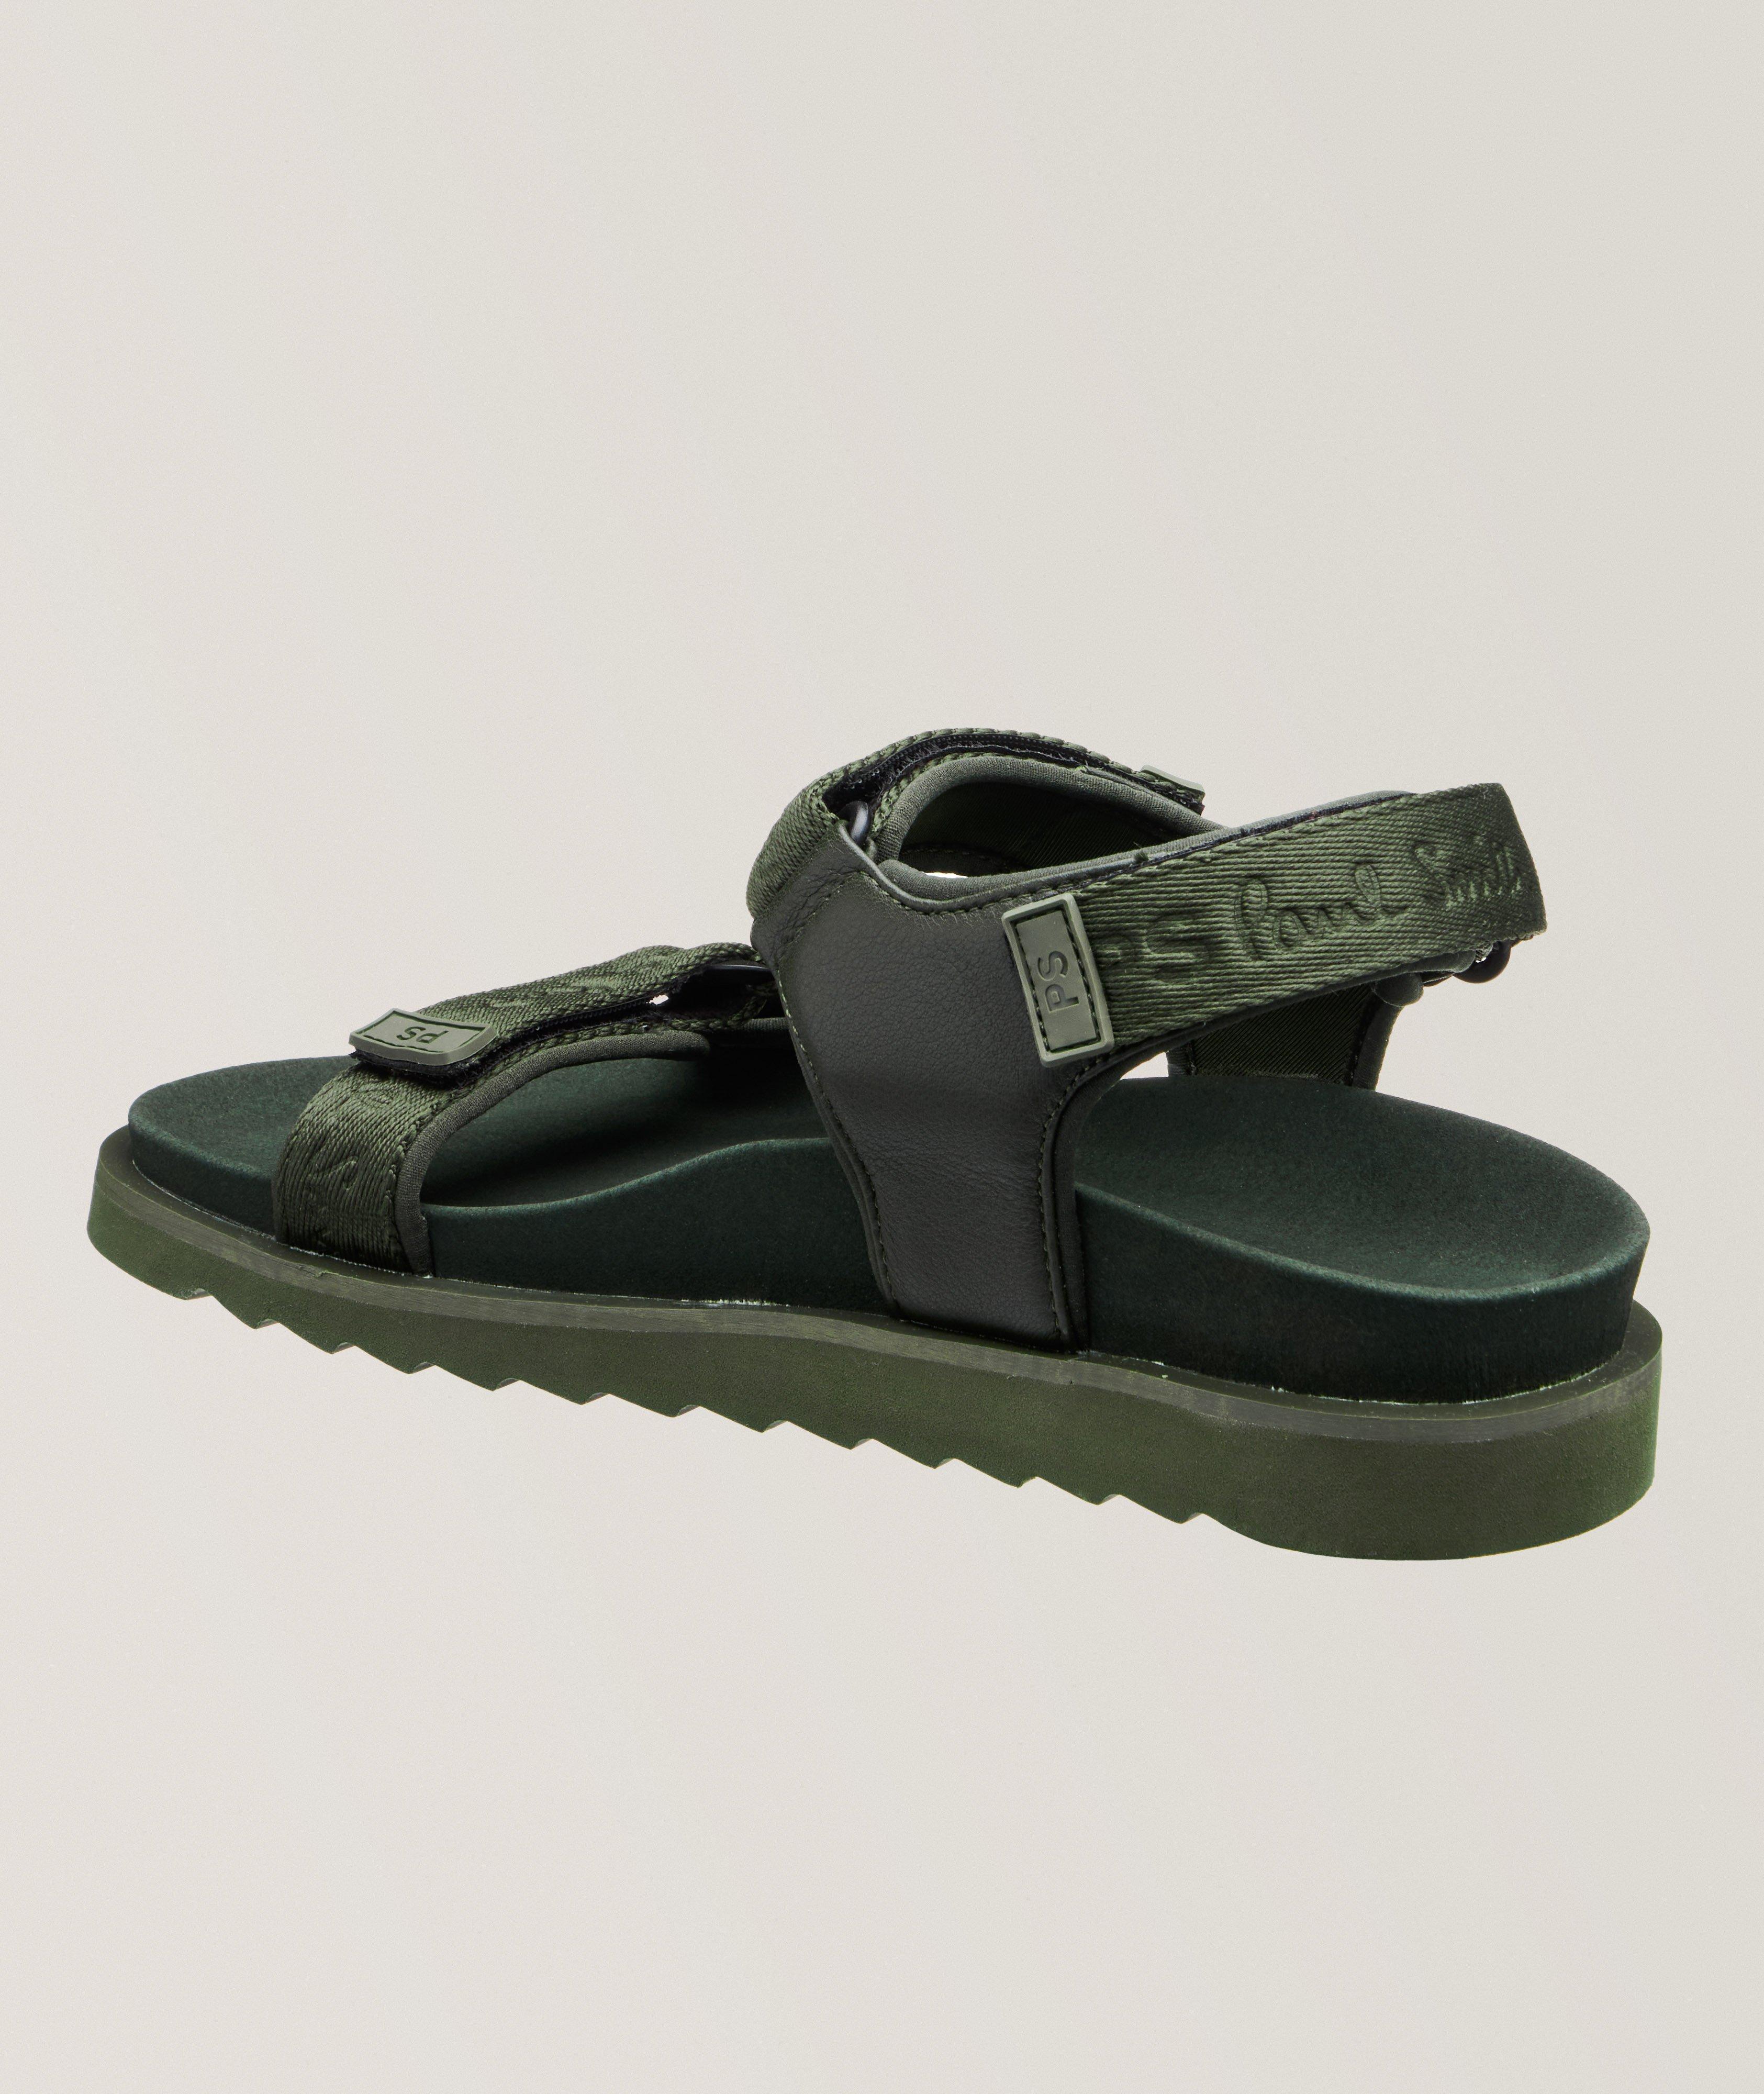 Dorado Suede & Leather Sandals image 1